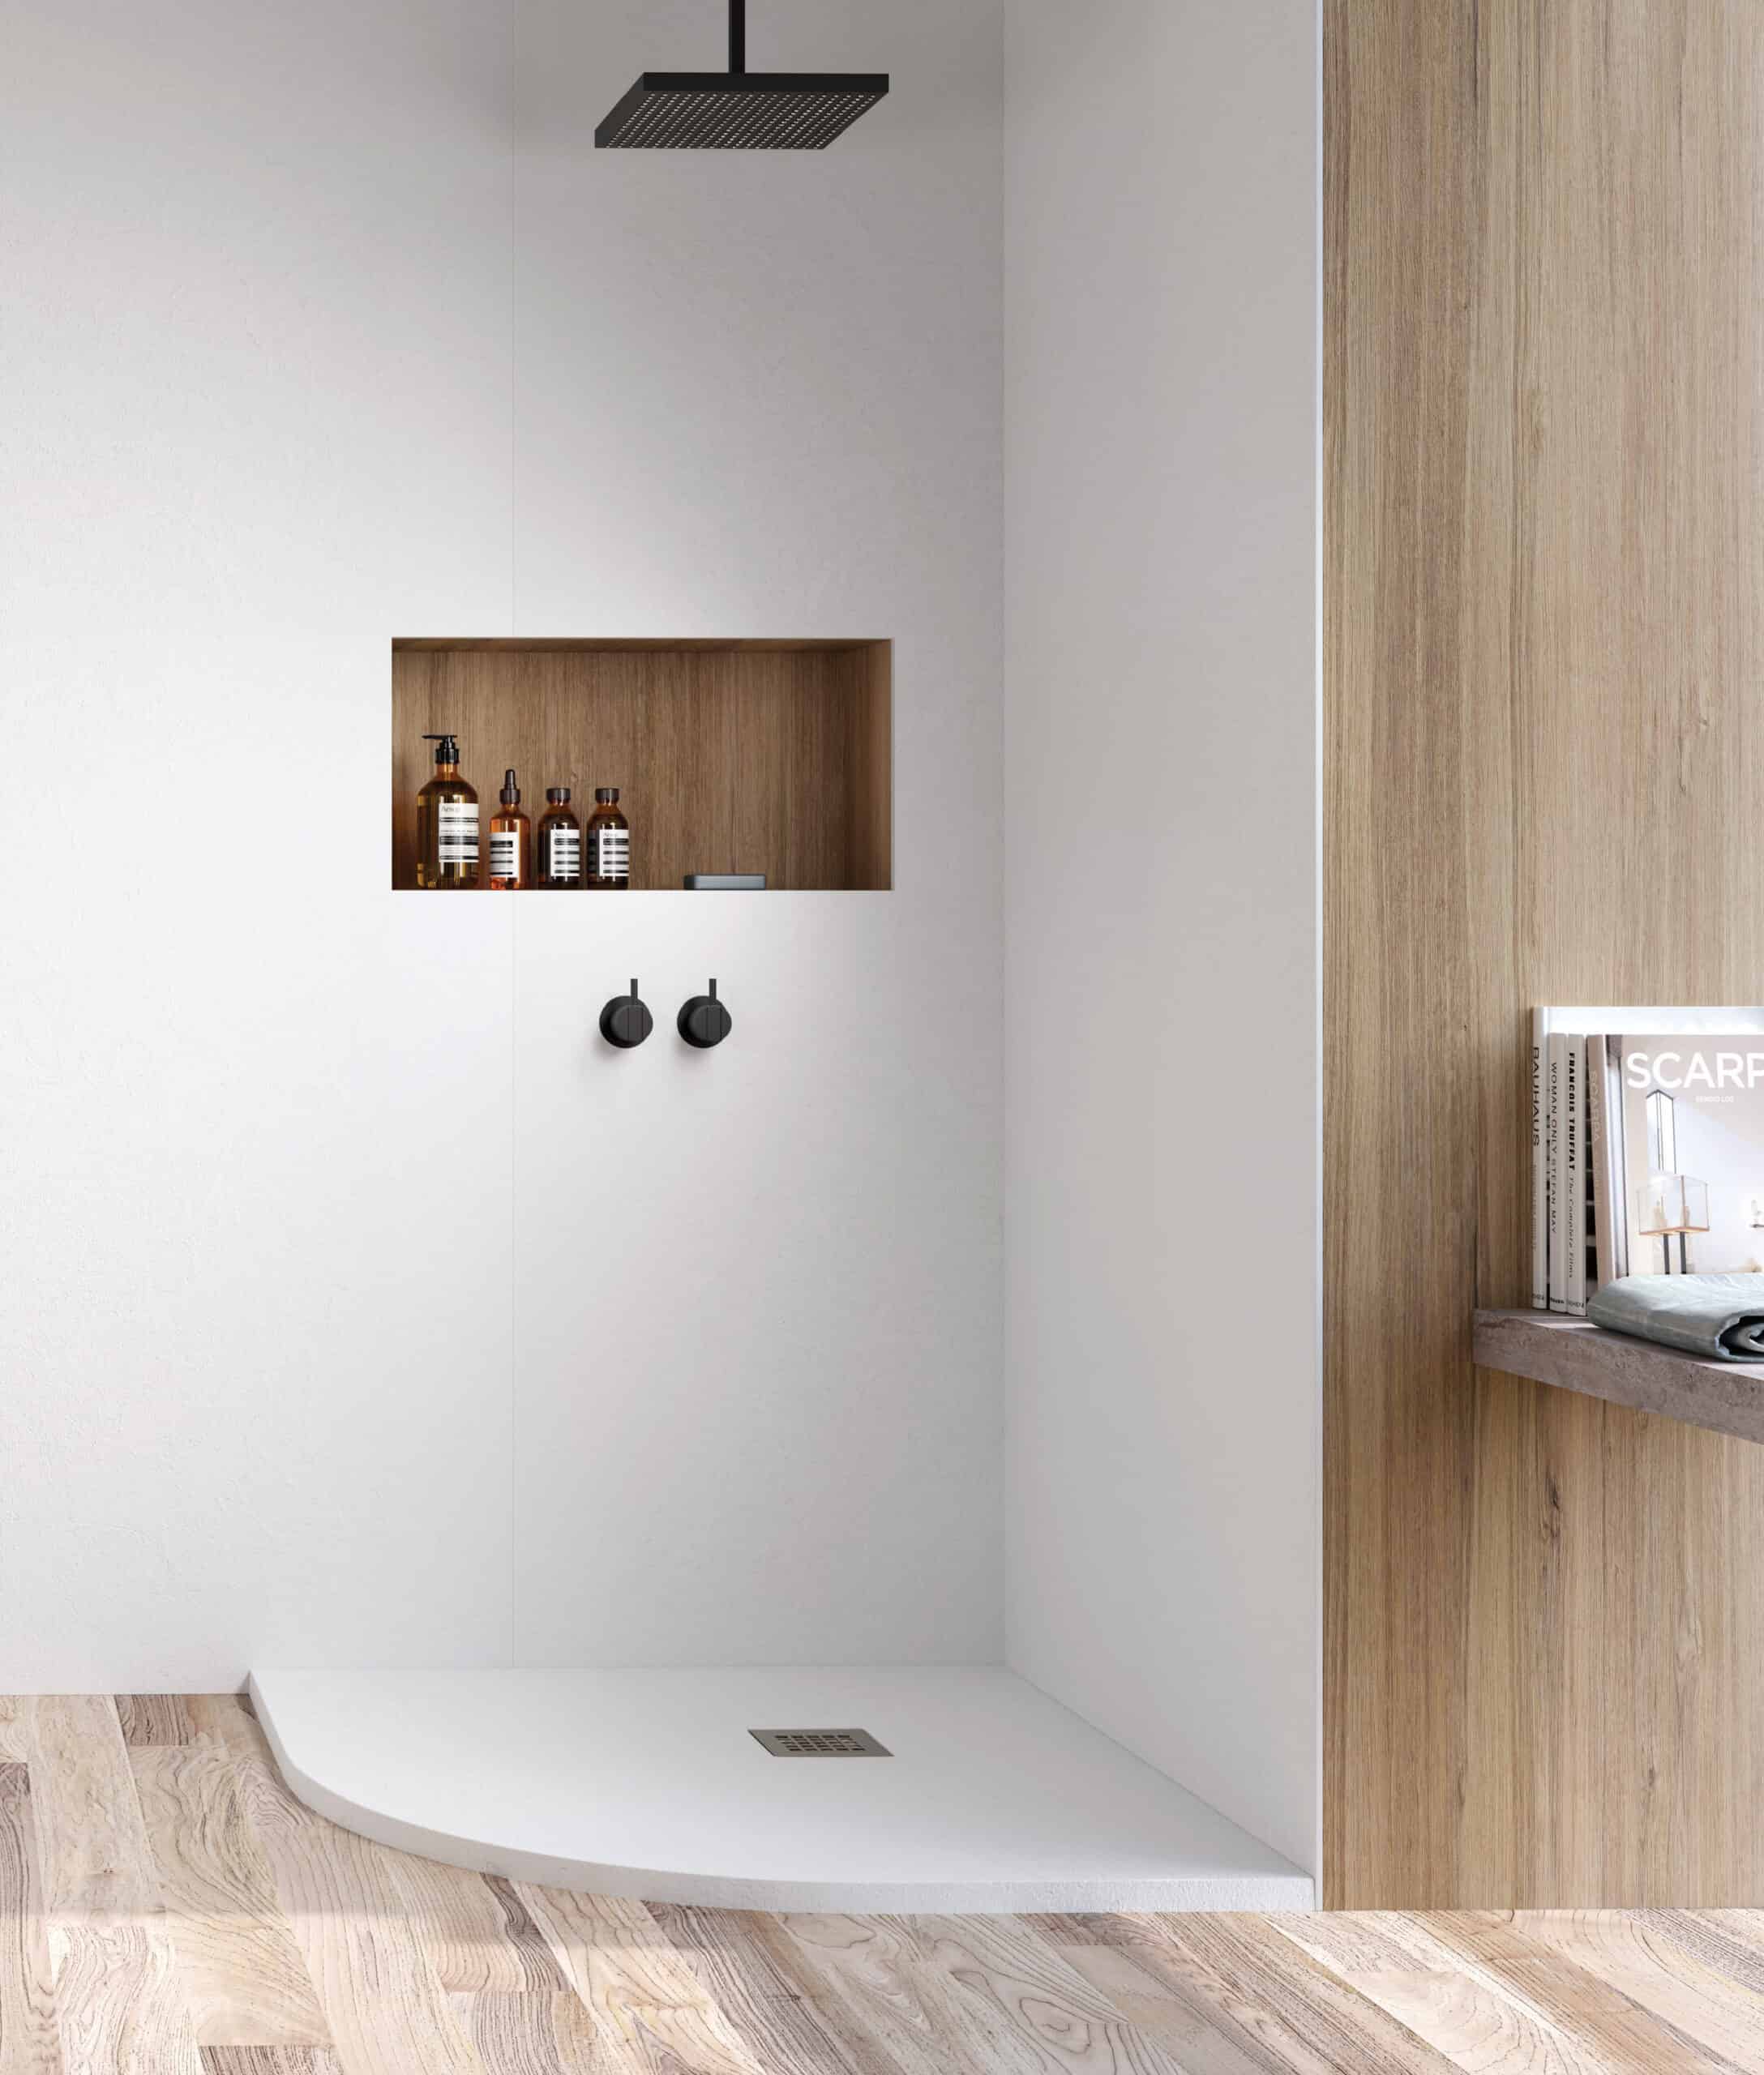 Kyntos F - White Slate Shower Tray – Bathroom Store Ireland